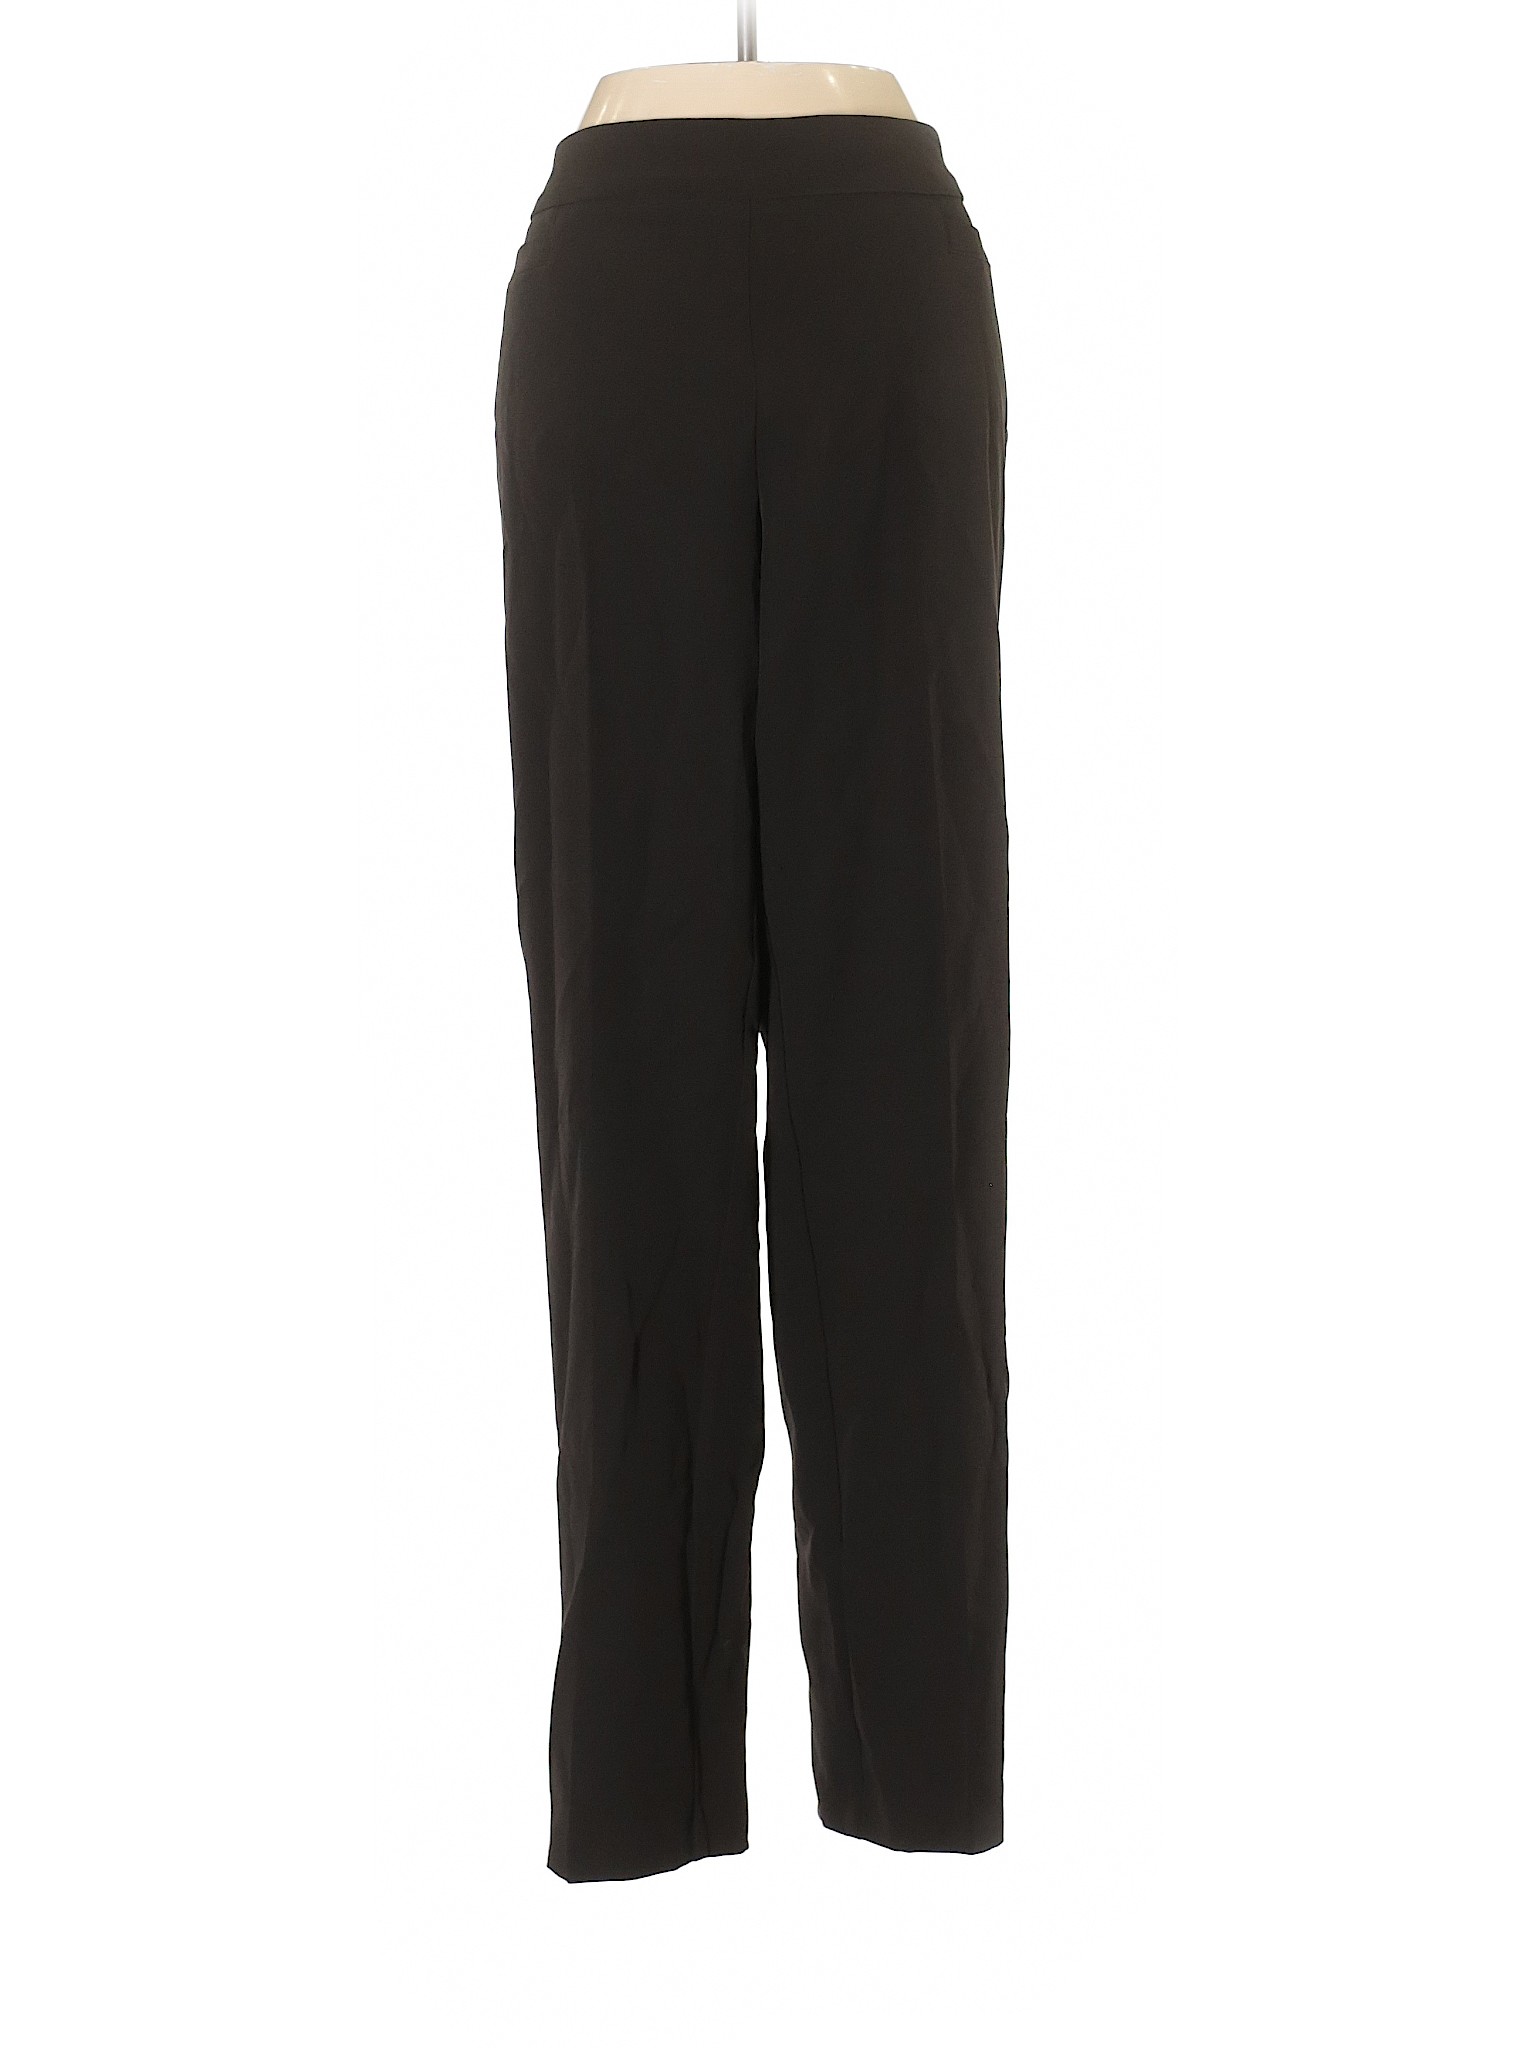 Zac & Rachel Women Black Casual Pants 10 | eBay